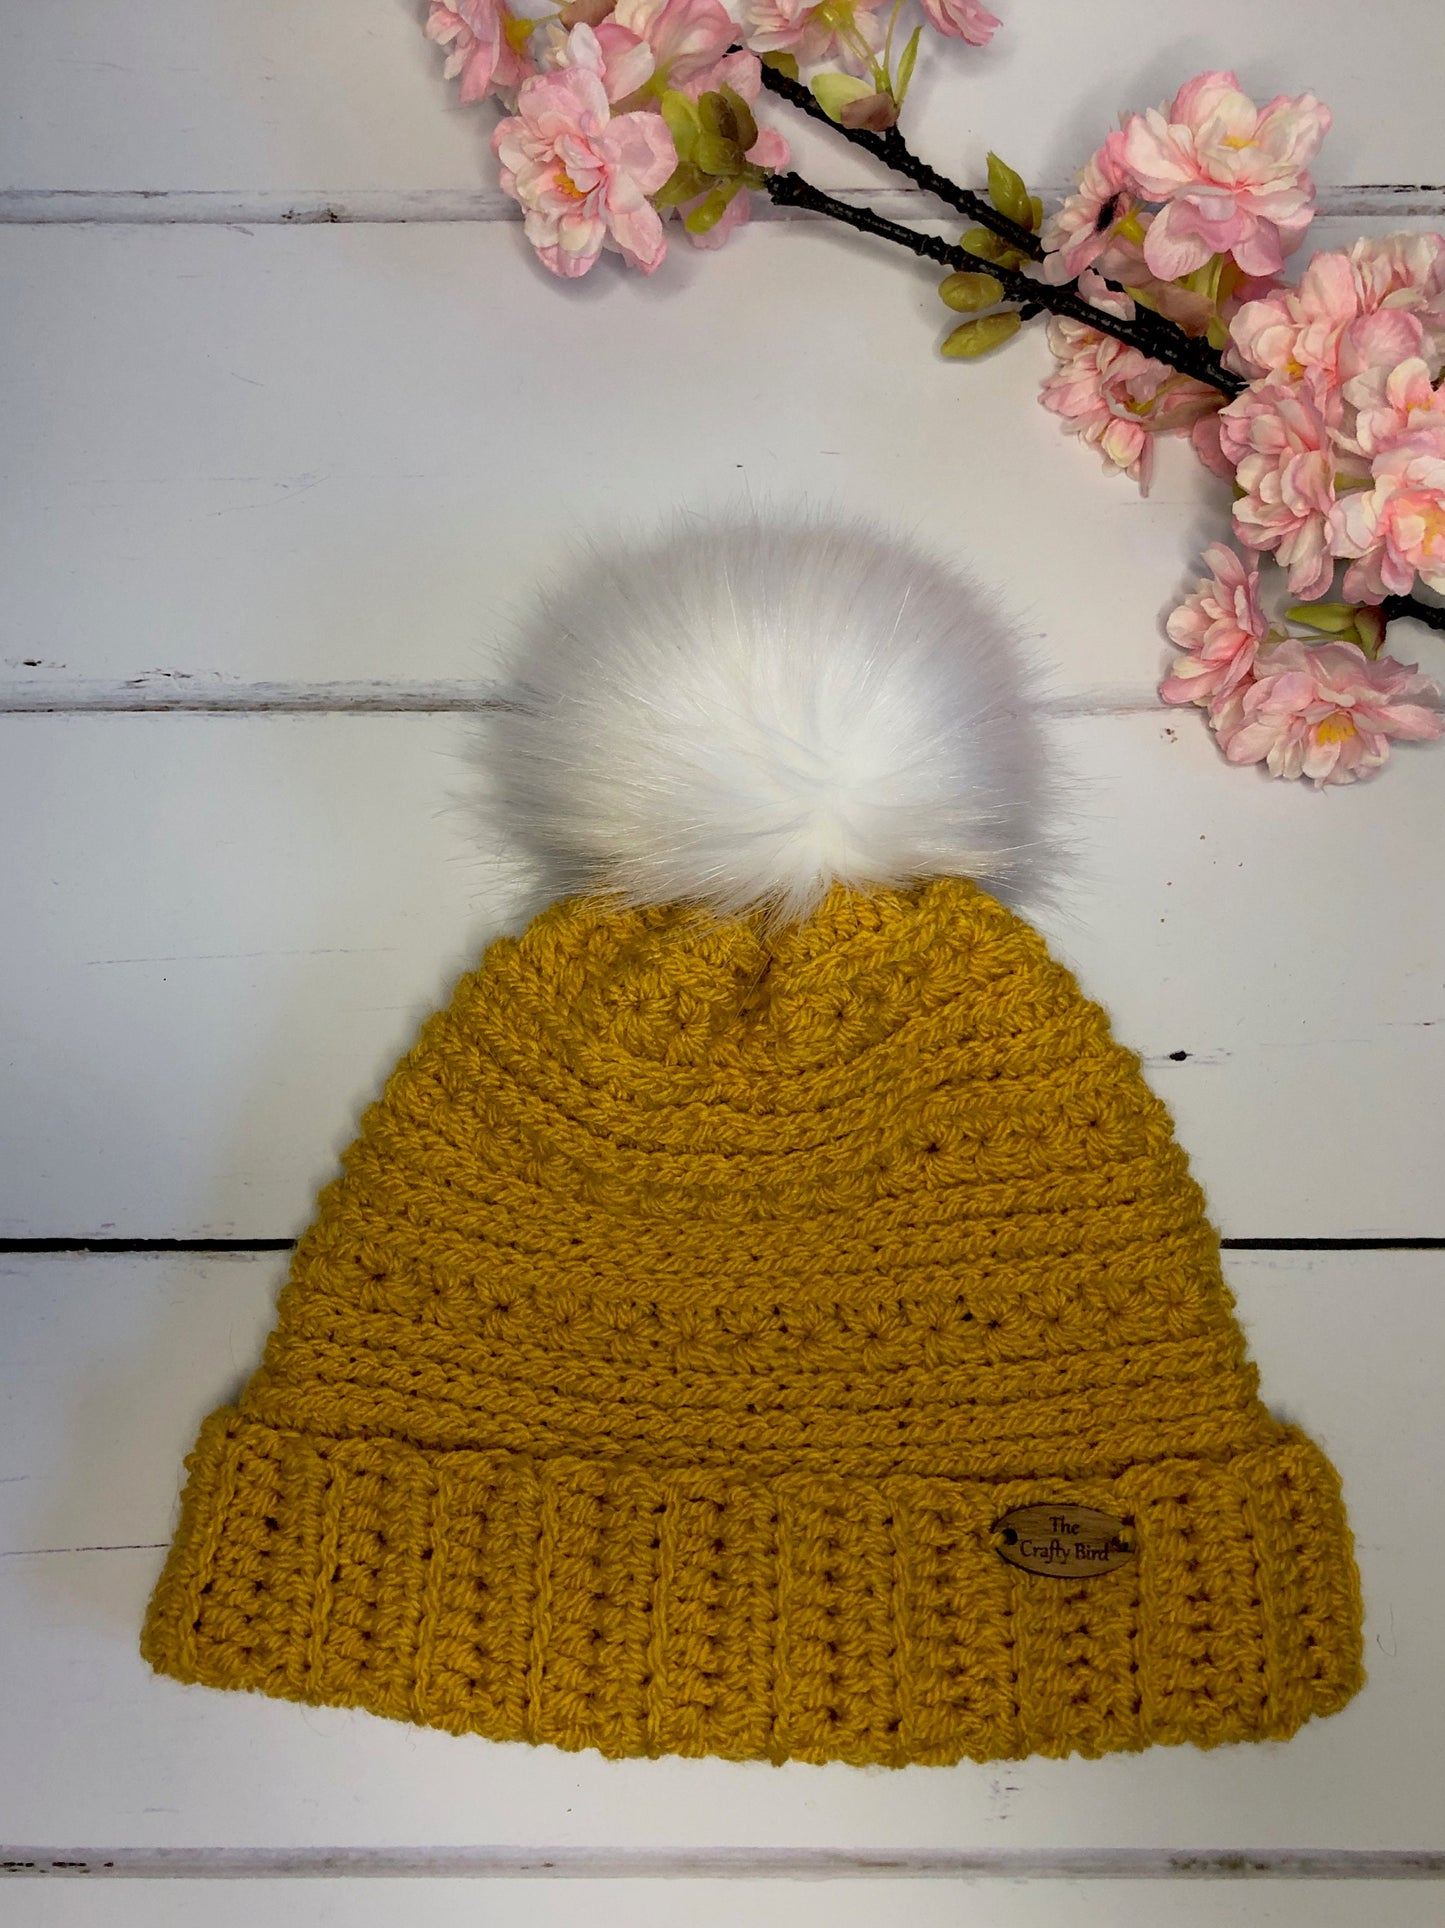 Star Crochet pom pom hat pattern - Intermediate